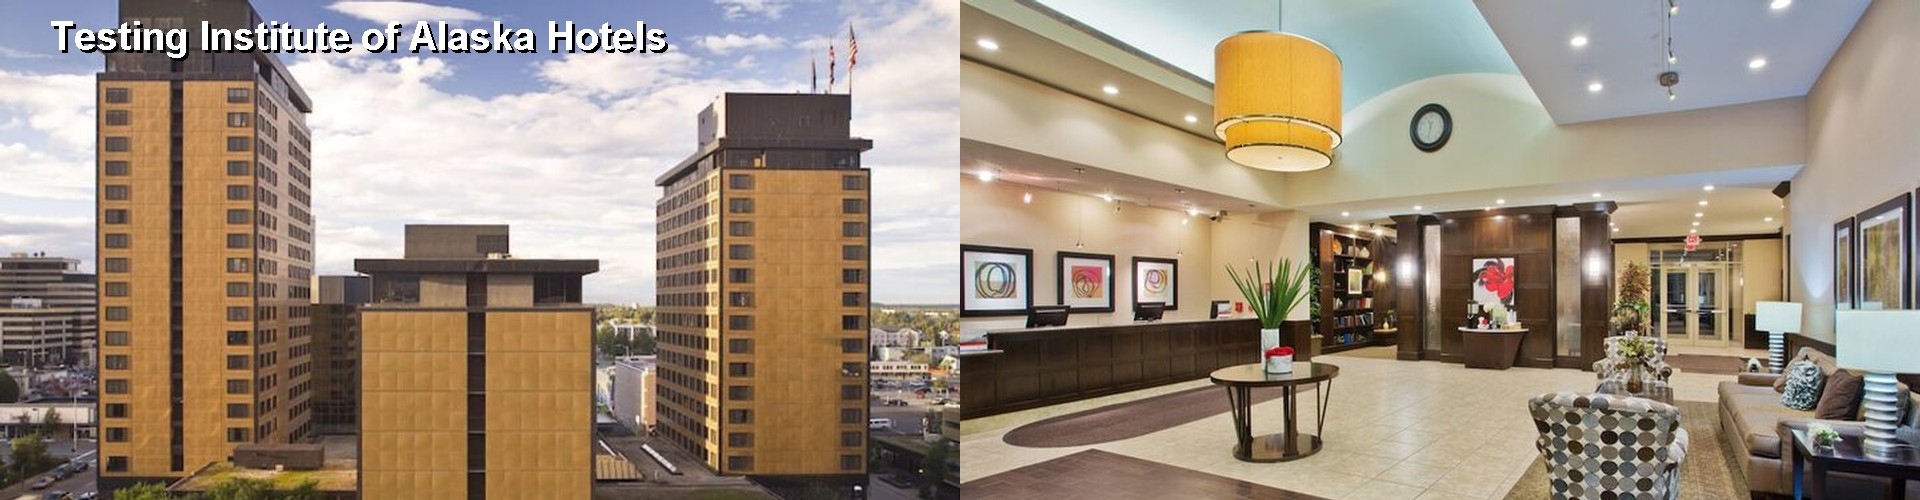 3 Best Hotels near Testing Institute of Alaska